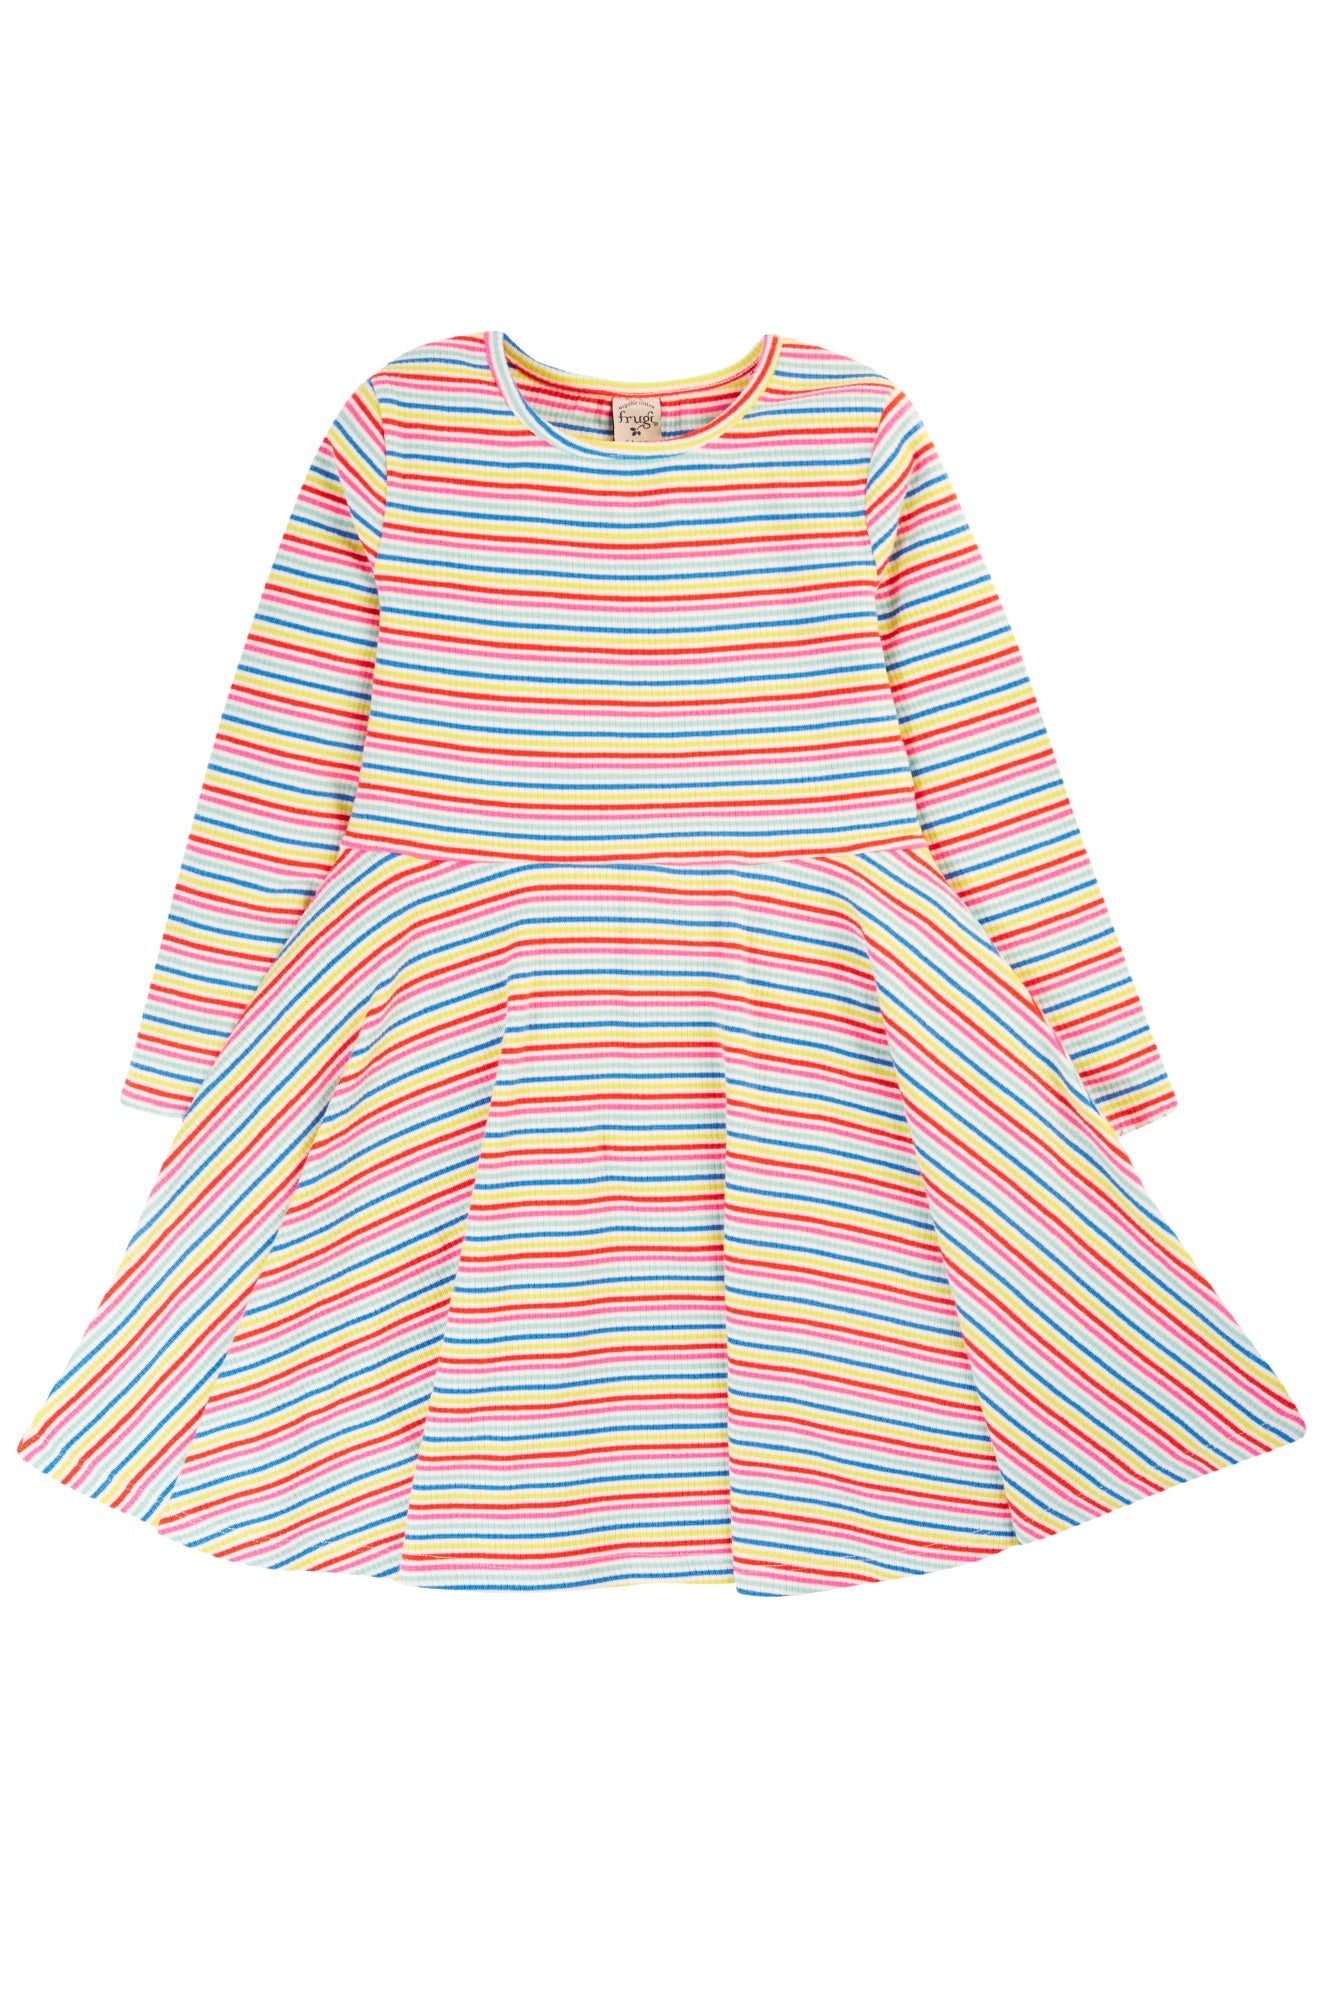 Frugi Rhianna Rib Skater Dress in Rainbow Rib Stripe-Kids-Ohh! By Gum - Shop Sustainable